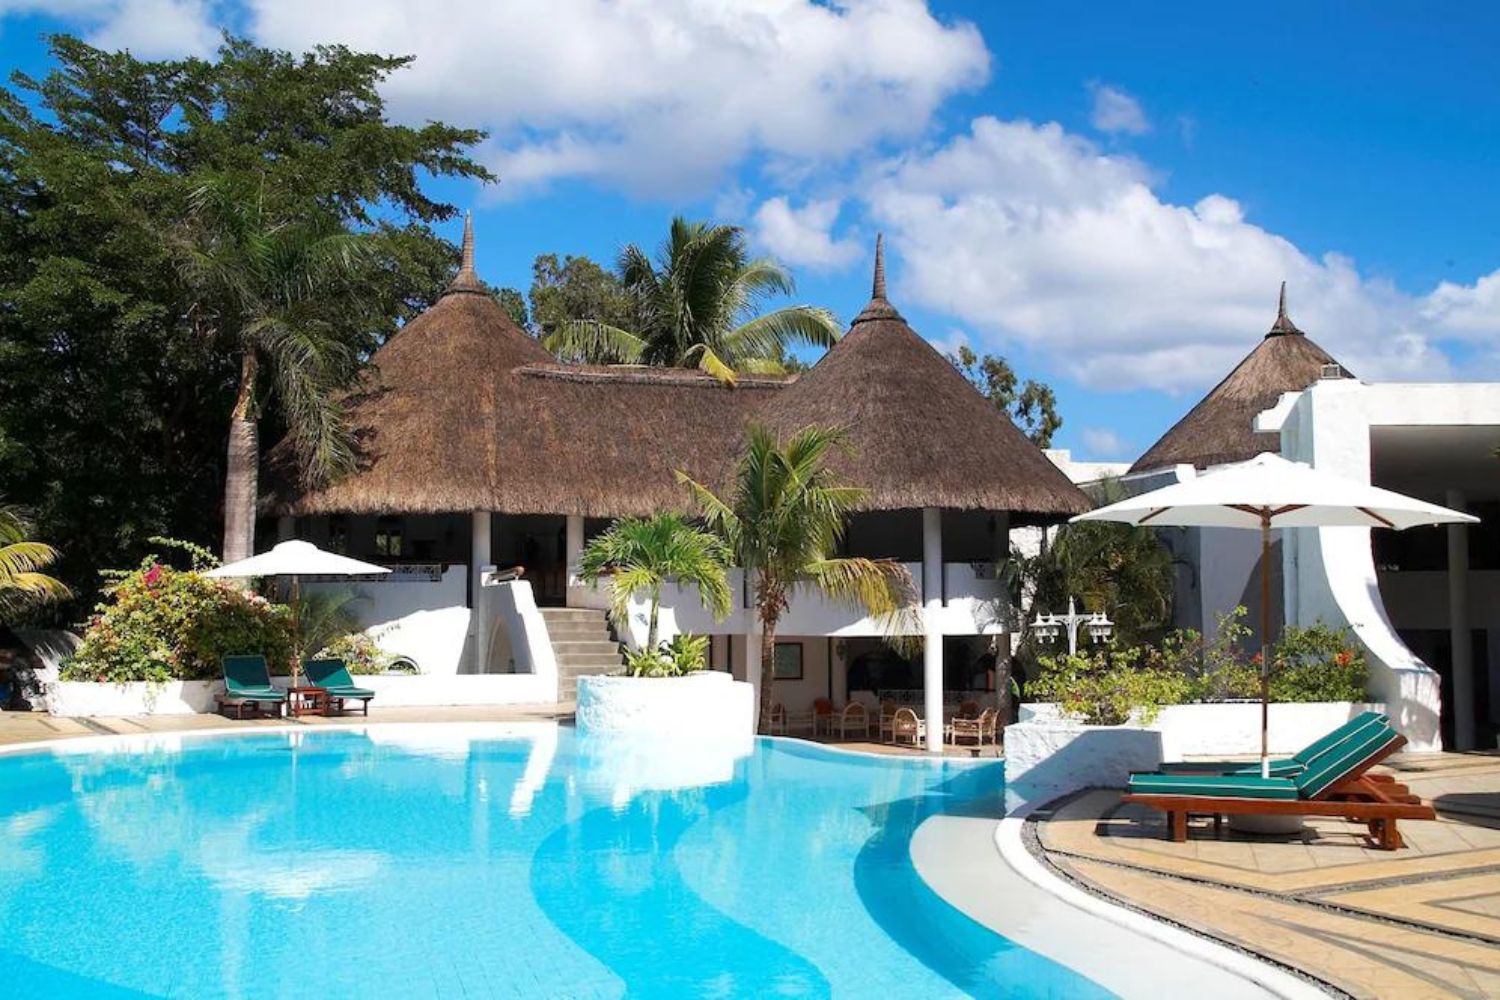 Маврикий цена на двоих. Отель Casuarina Resort Маврикий. Casuarina Resort Spa 4 Маврикий. Мон Шуази Маврикий. Пляж Мон Шуази Маврикий.